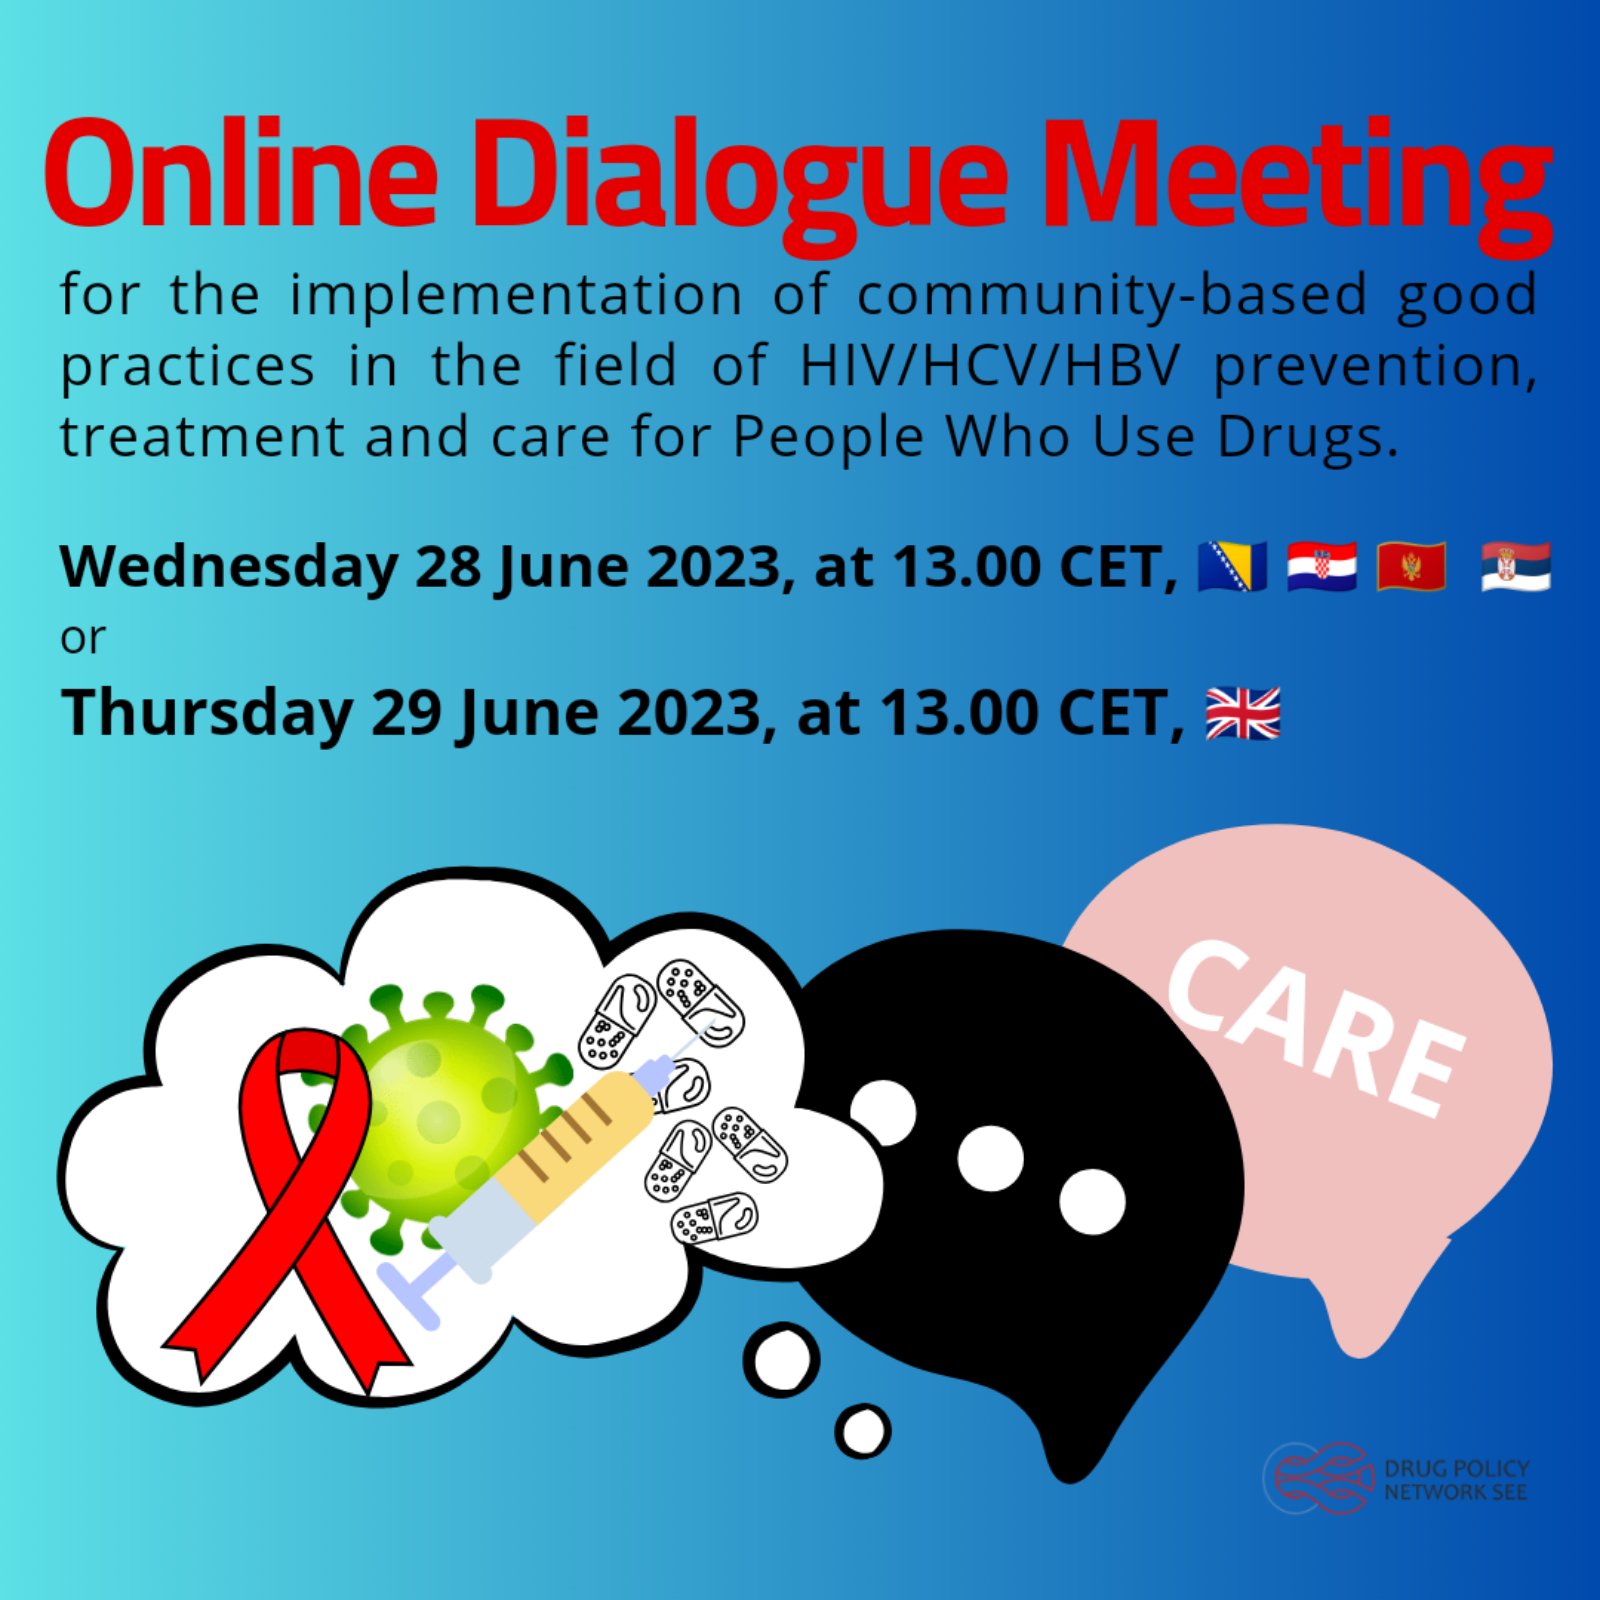 Online dialogue meetings